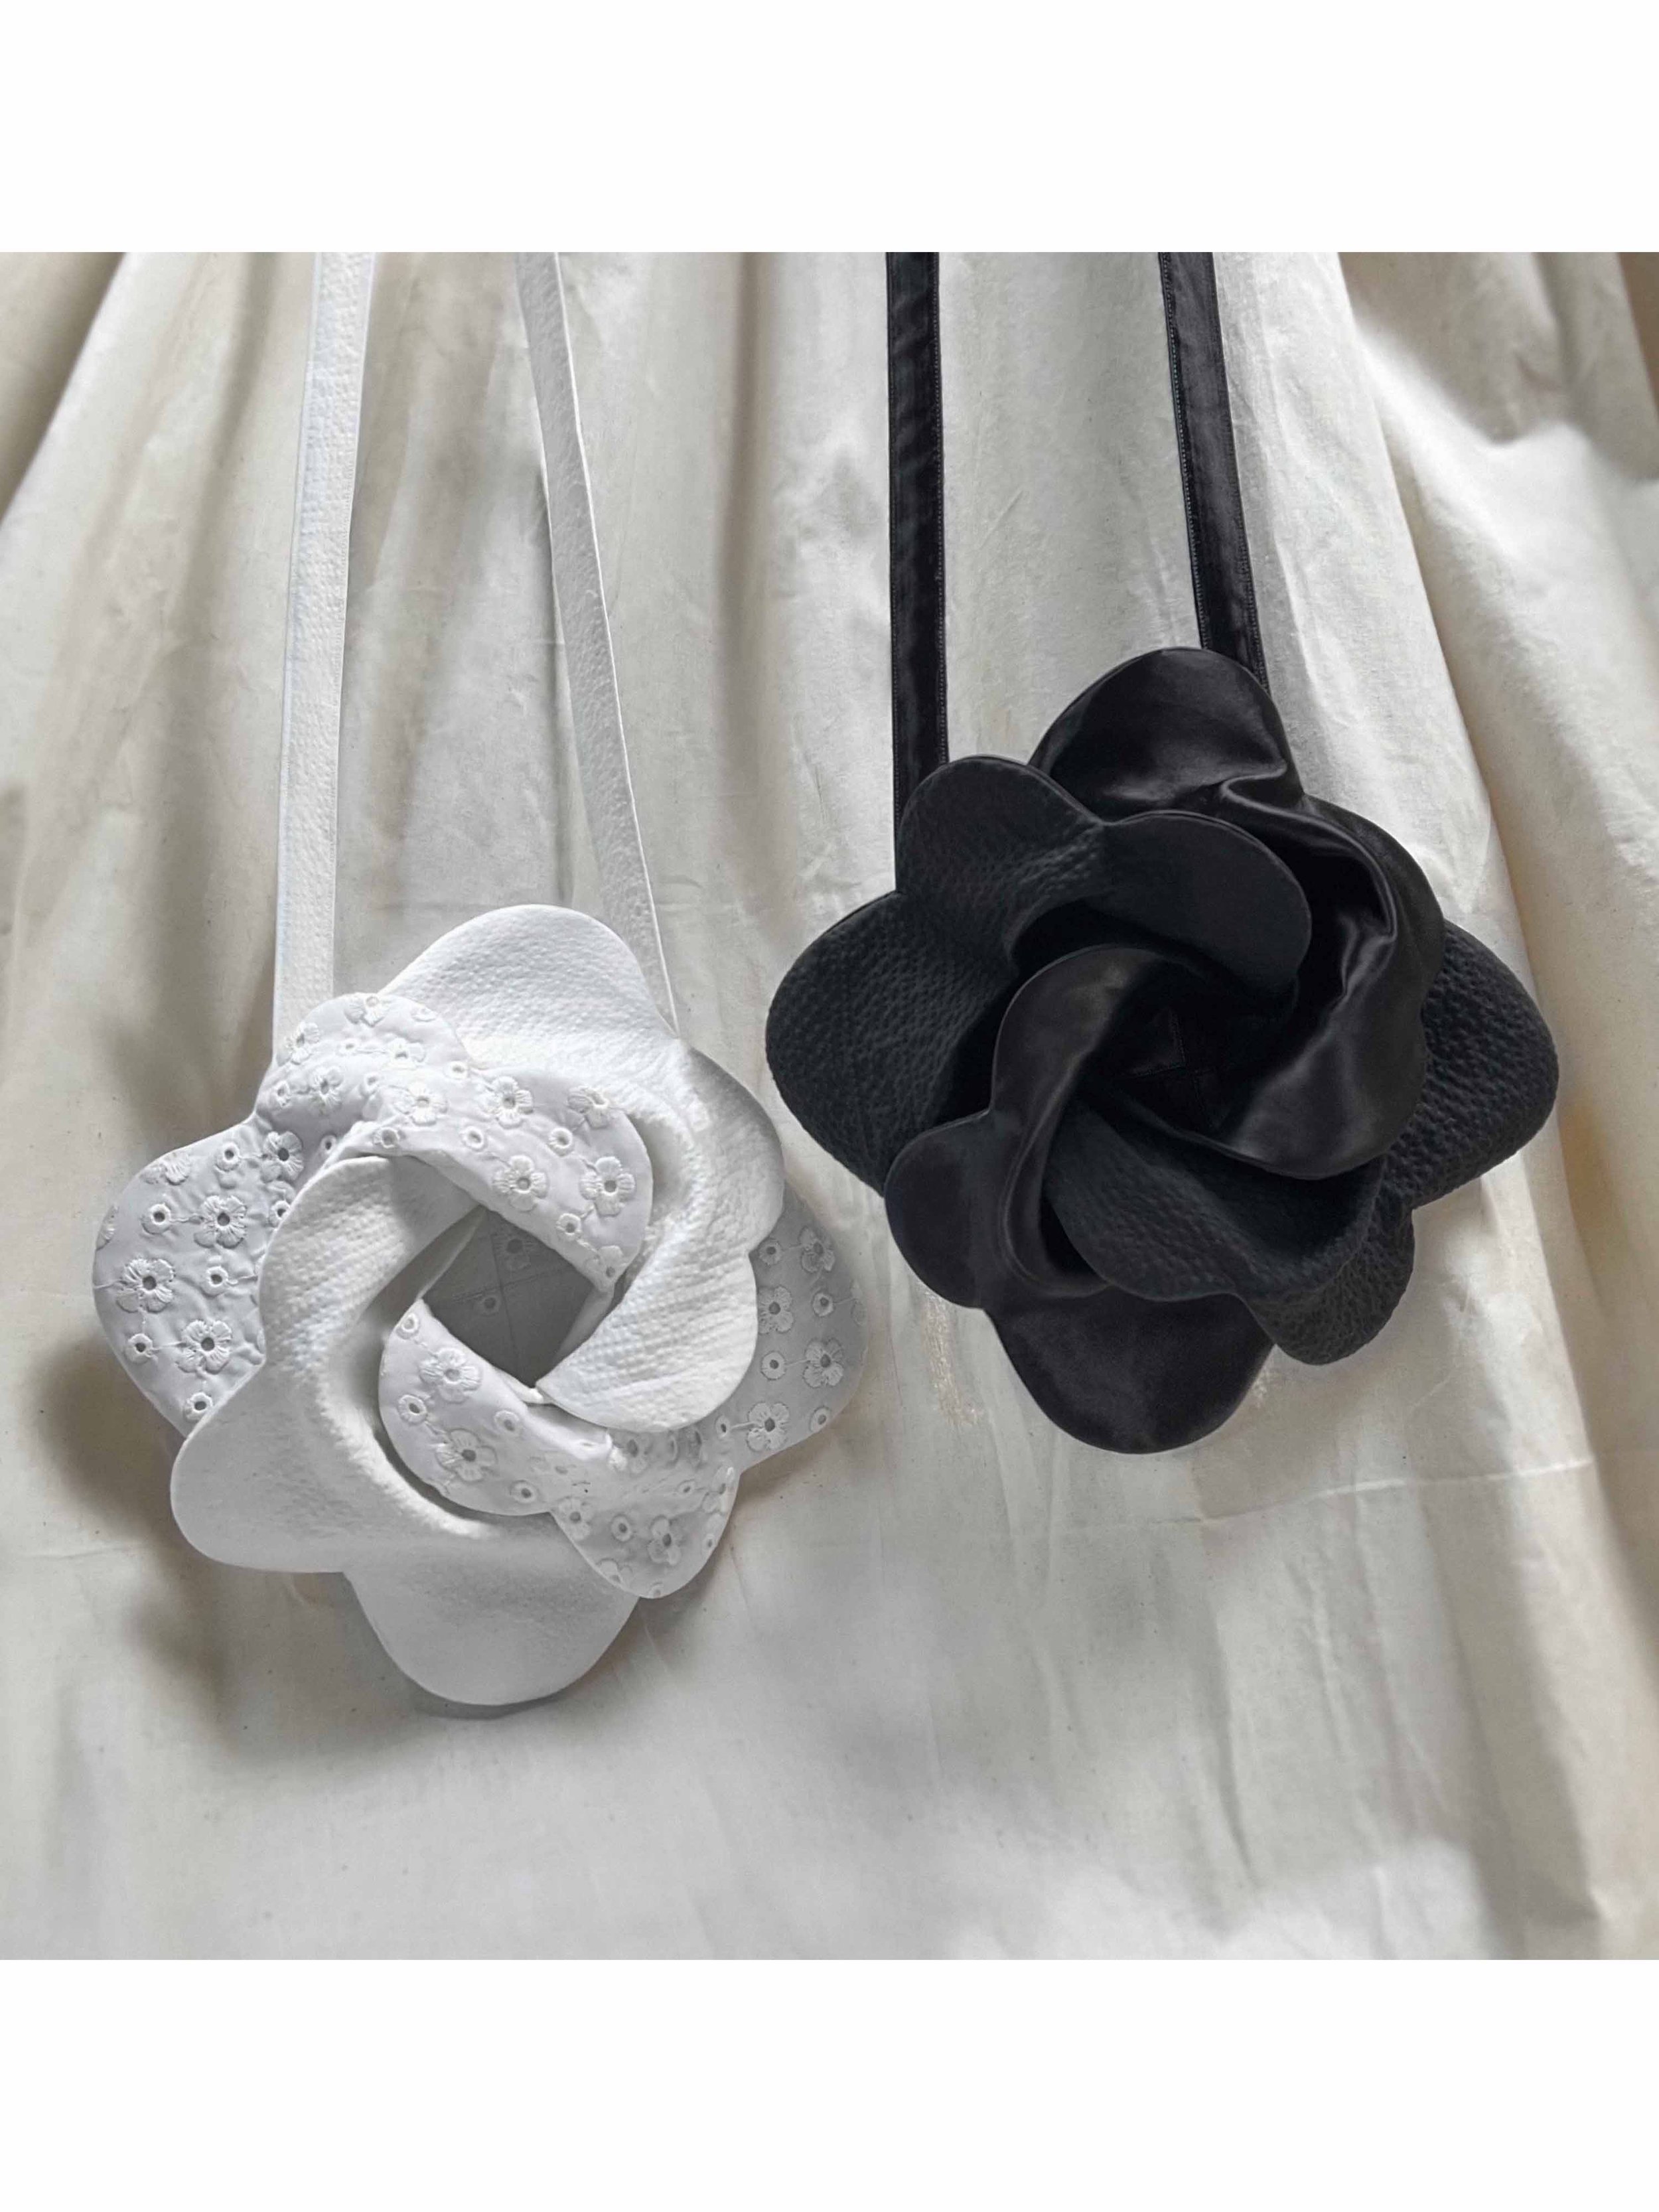 Flowertwist Mini Bags (Black and white)-P.jpg